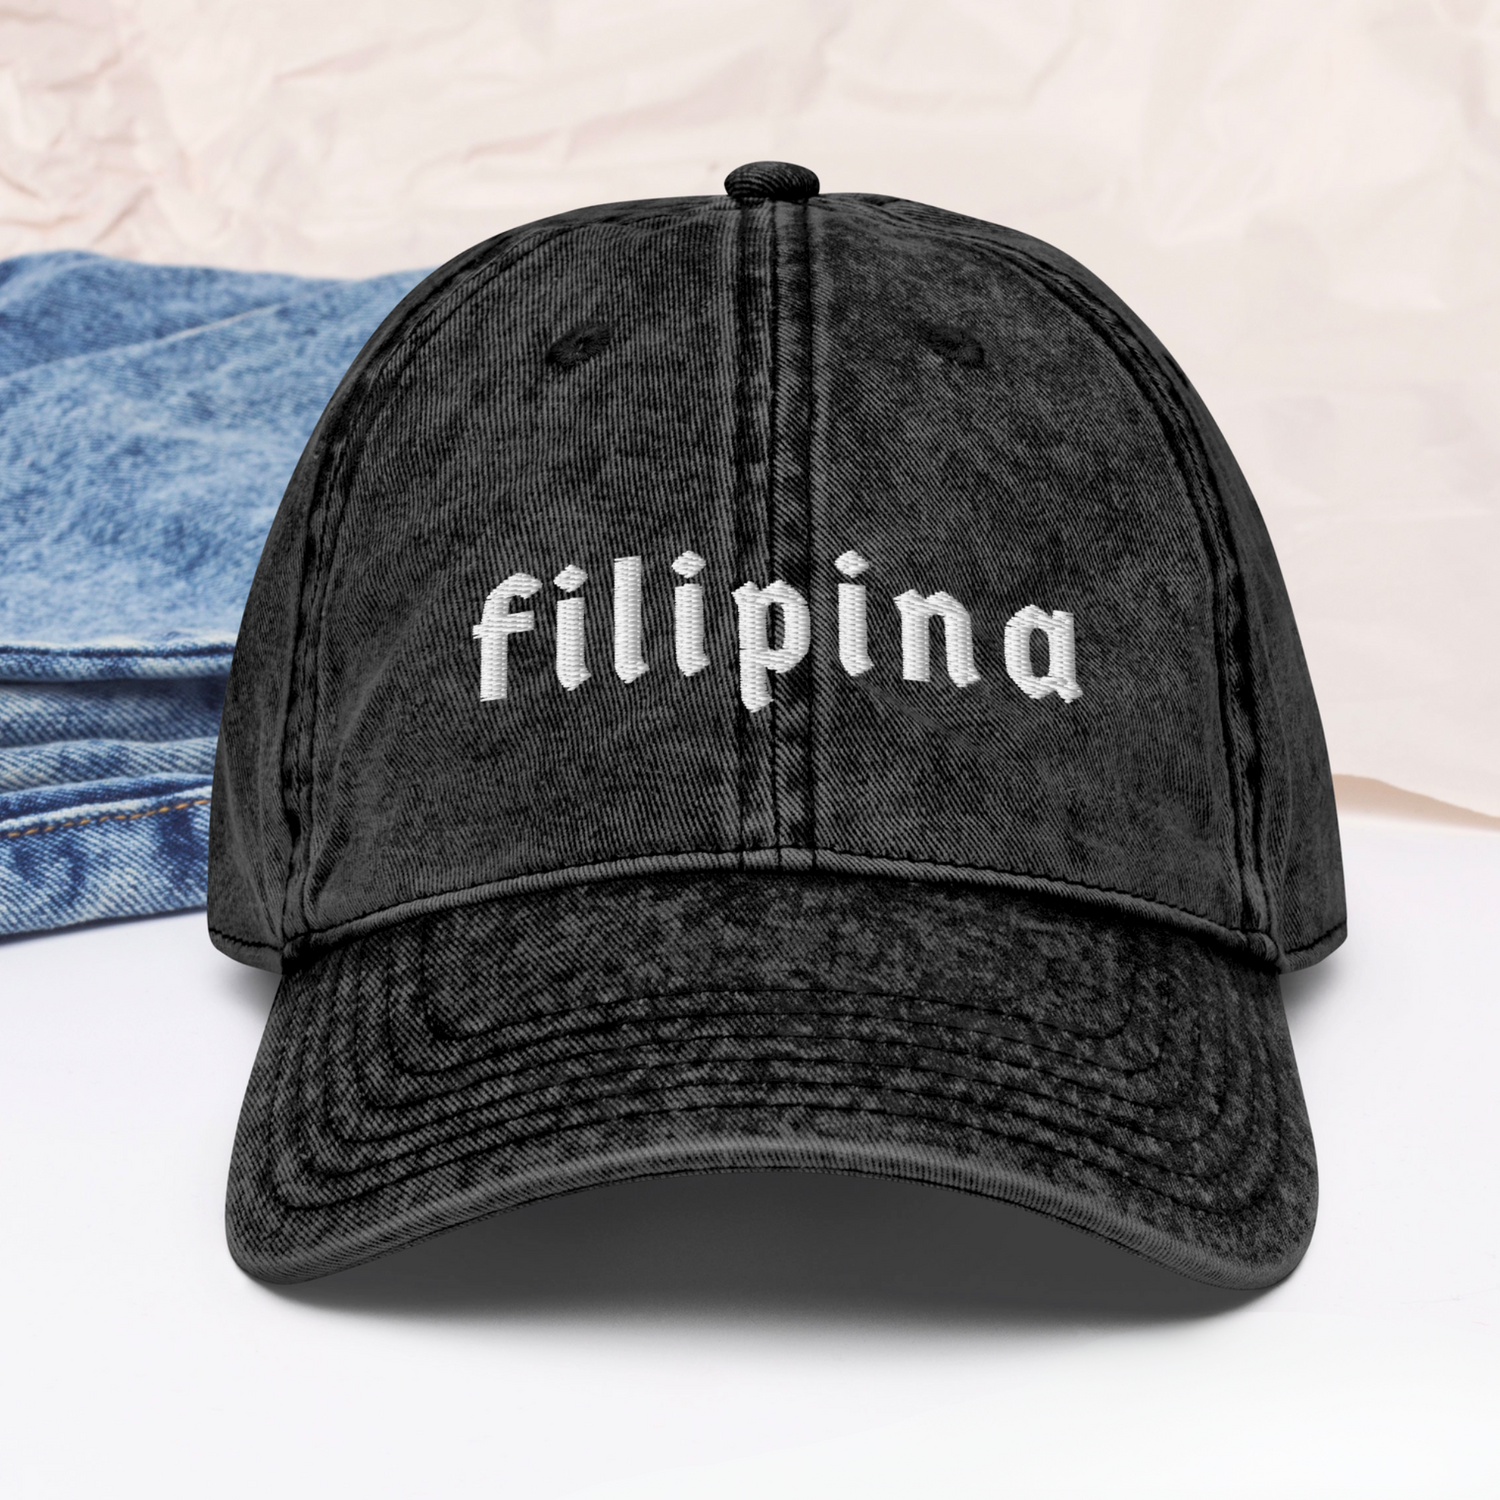 Filipino Cap Filipina Embroidered Vintage Cotton Twill Main Image